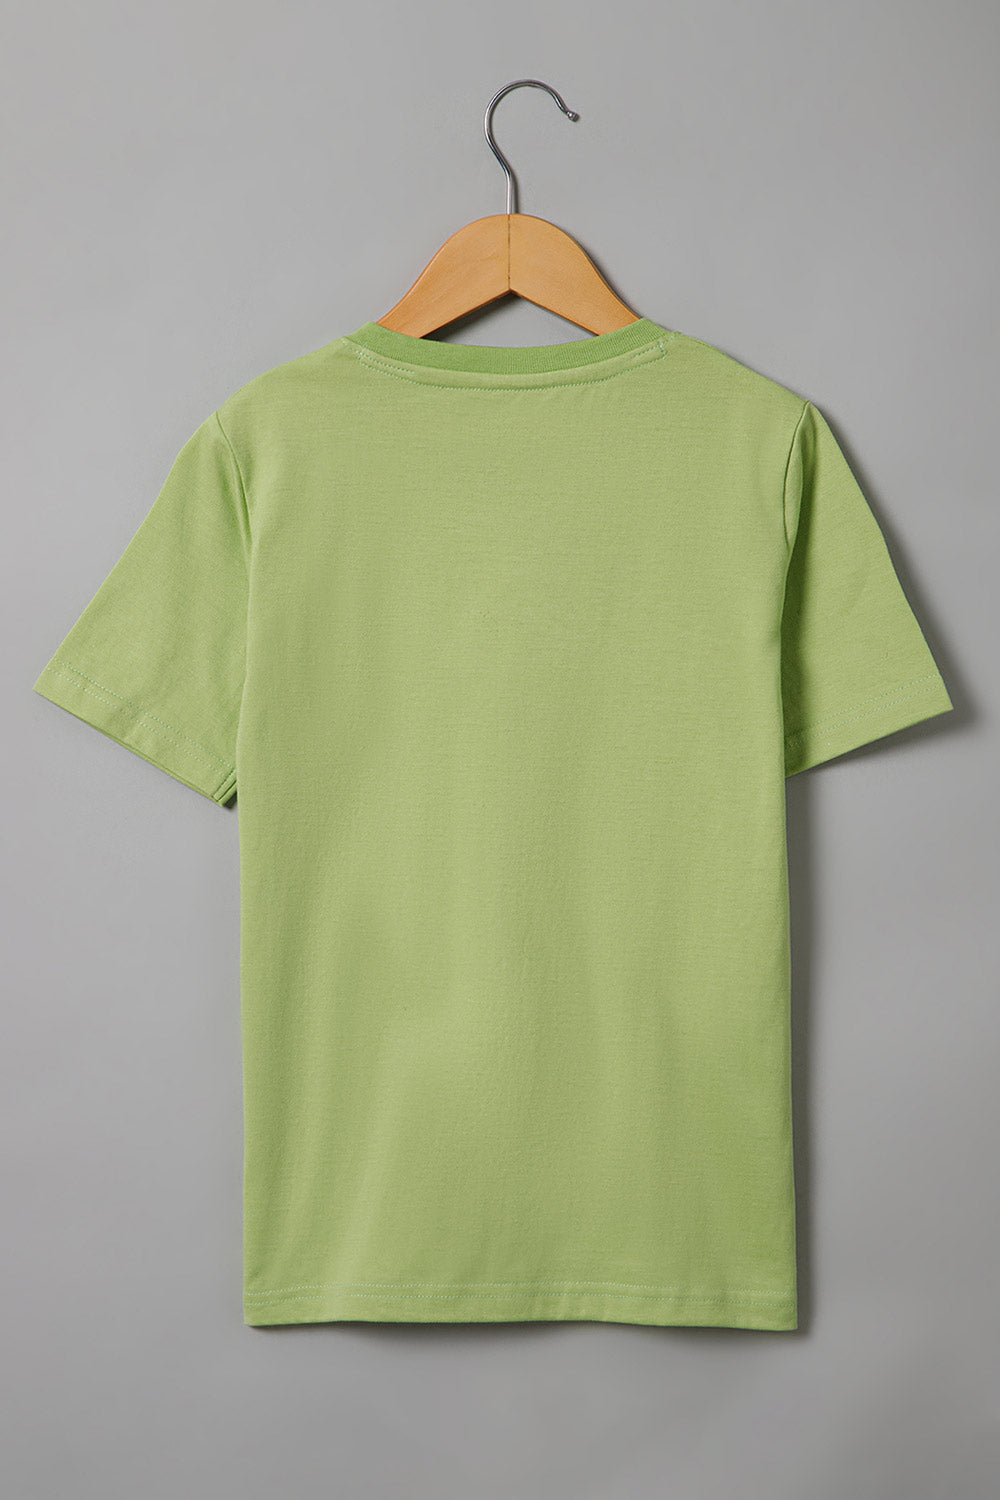 The Young Future Boy's T-shirt - Light Green - BD09